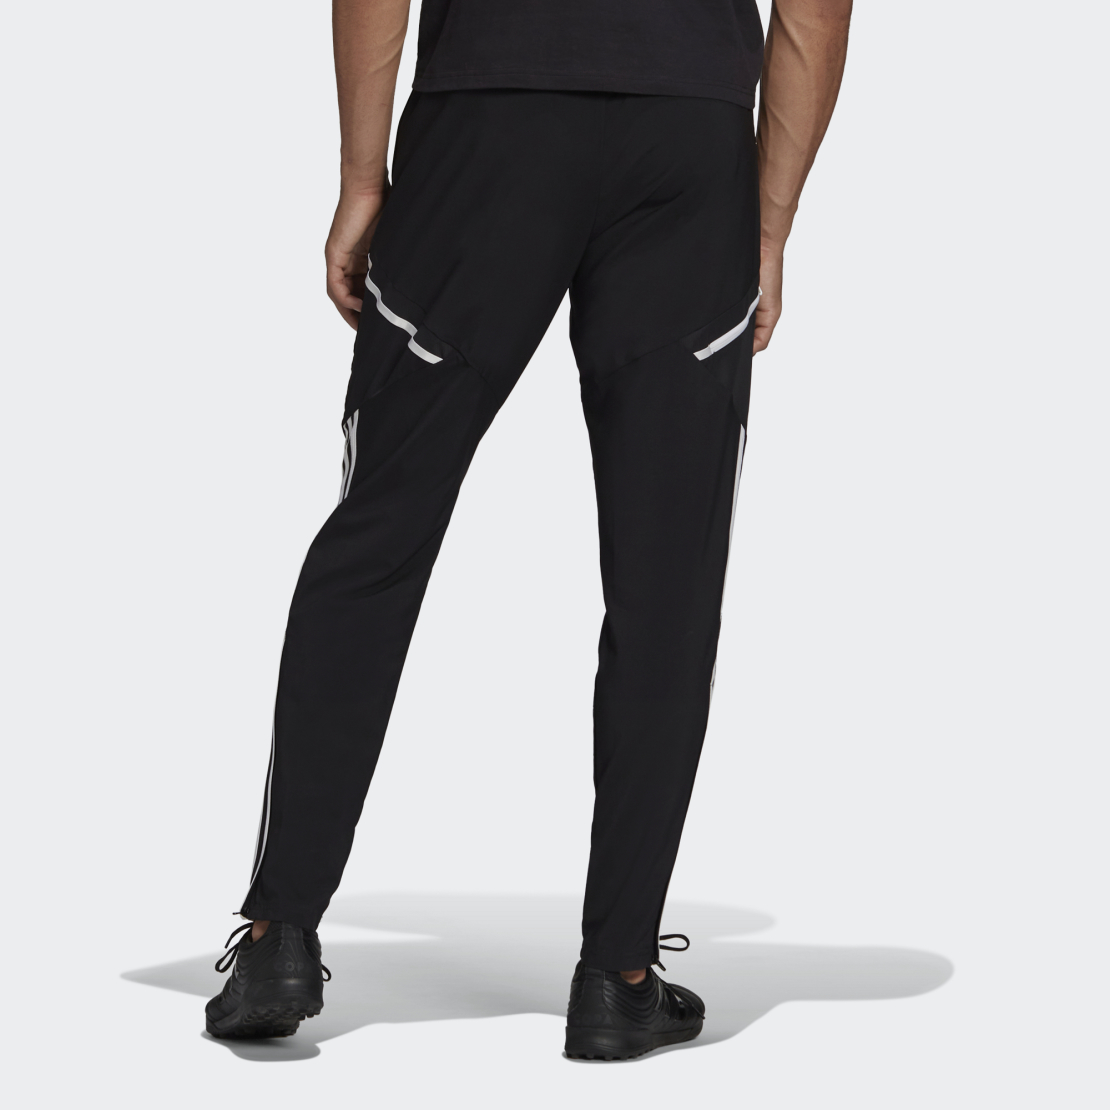 מכנס כדורל אדידס לגברים | Adidas Condivo 22 Pants